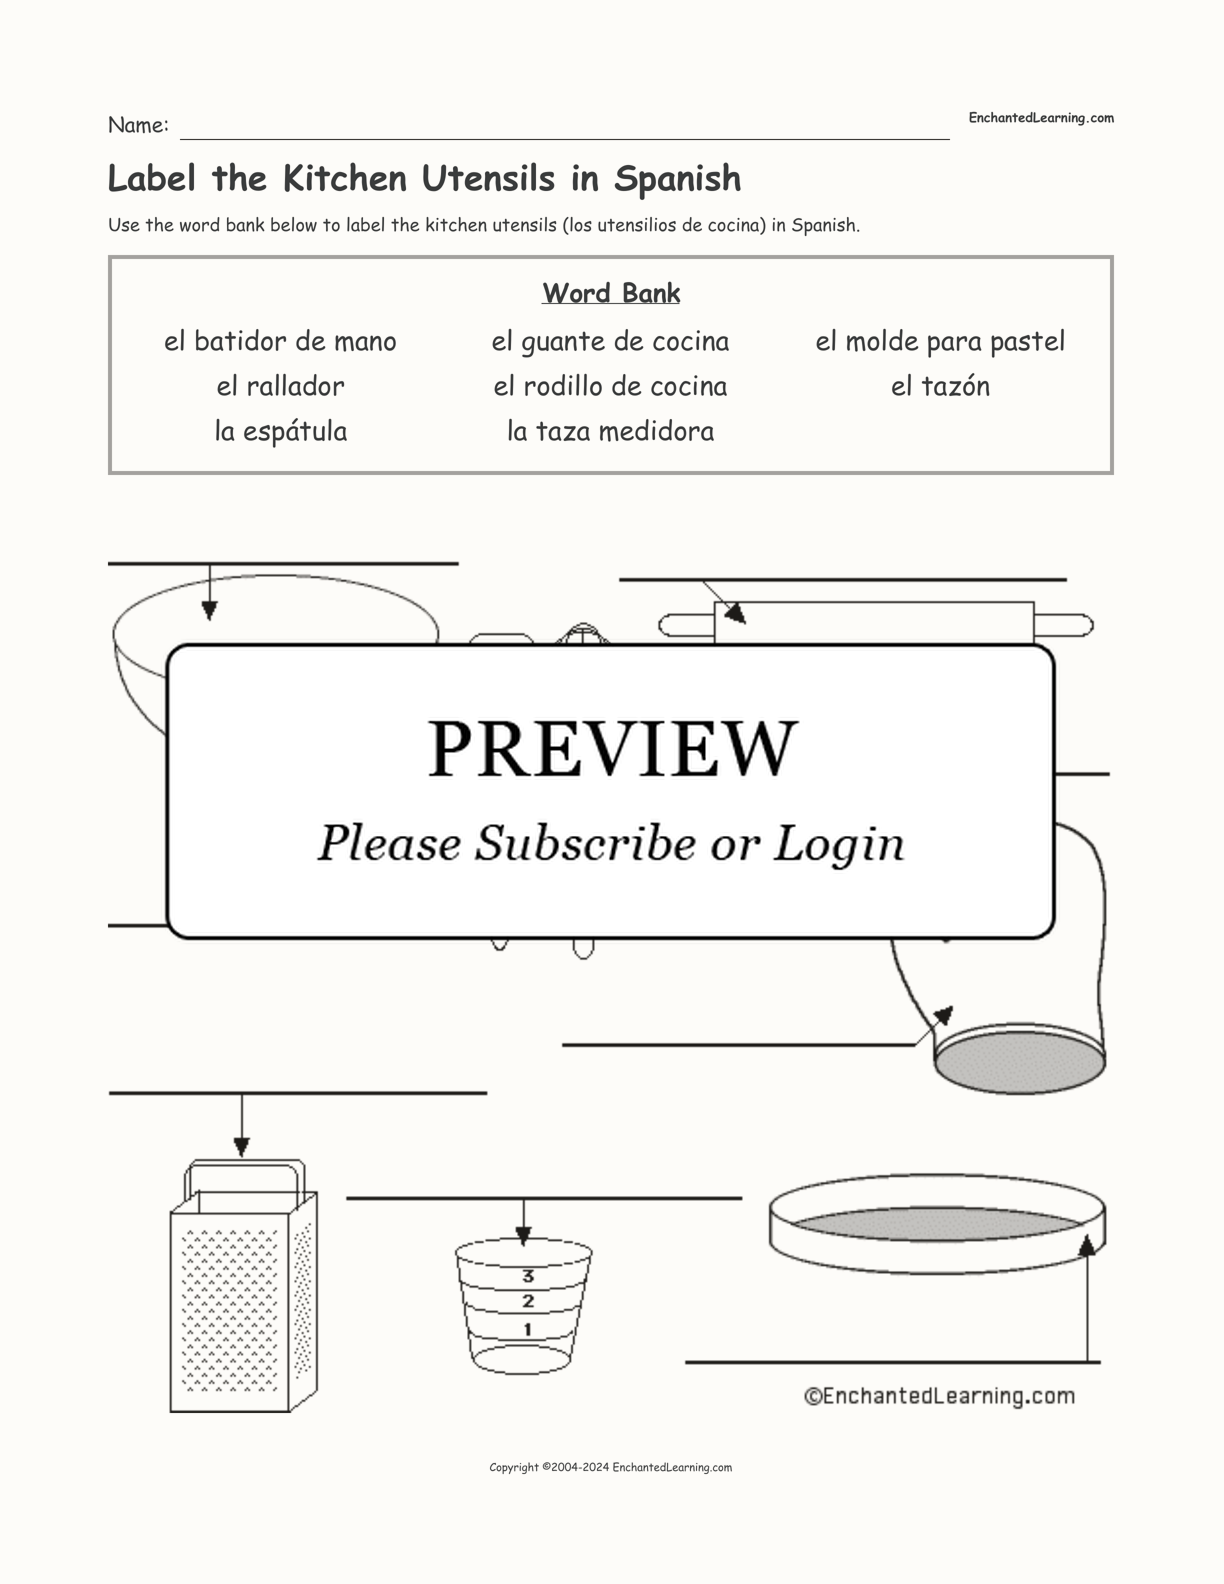 Label the Kitchen Utensils in Spanish interactive worksheet page 1